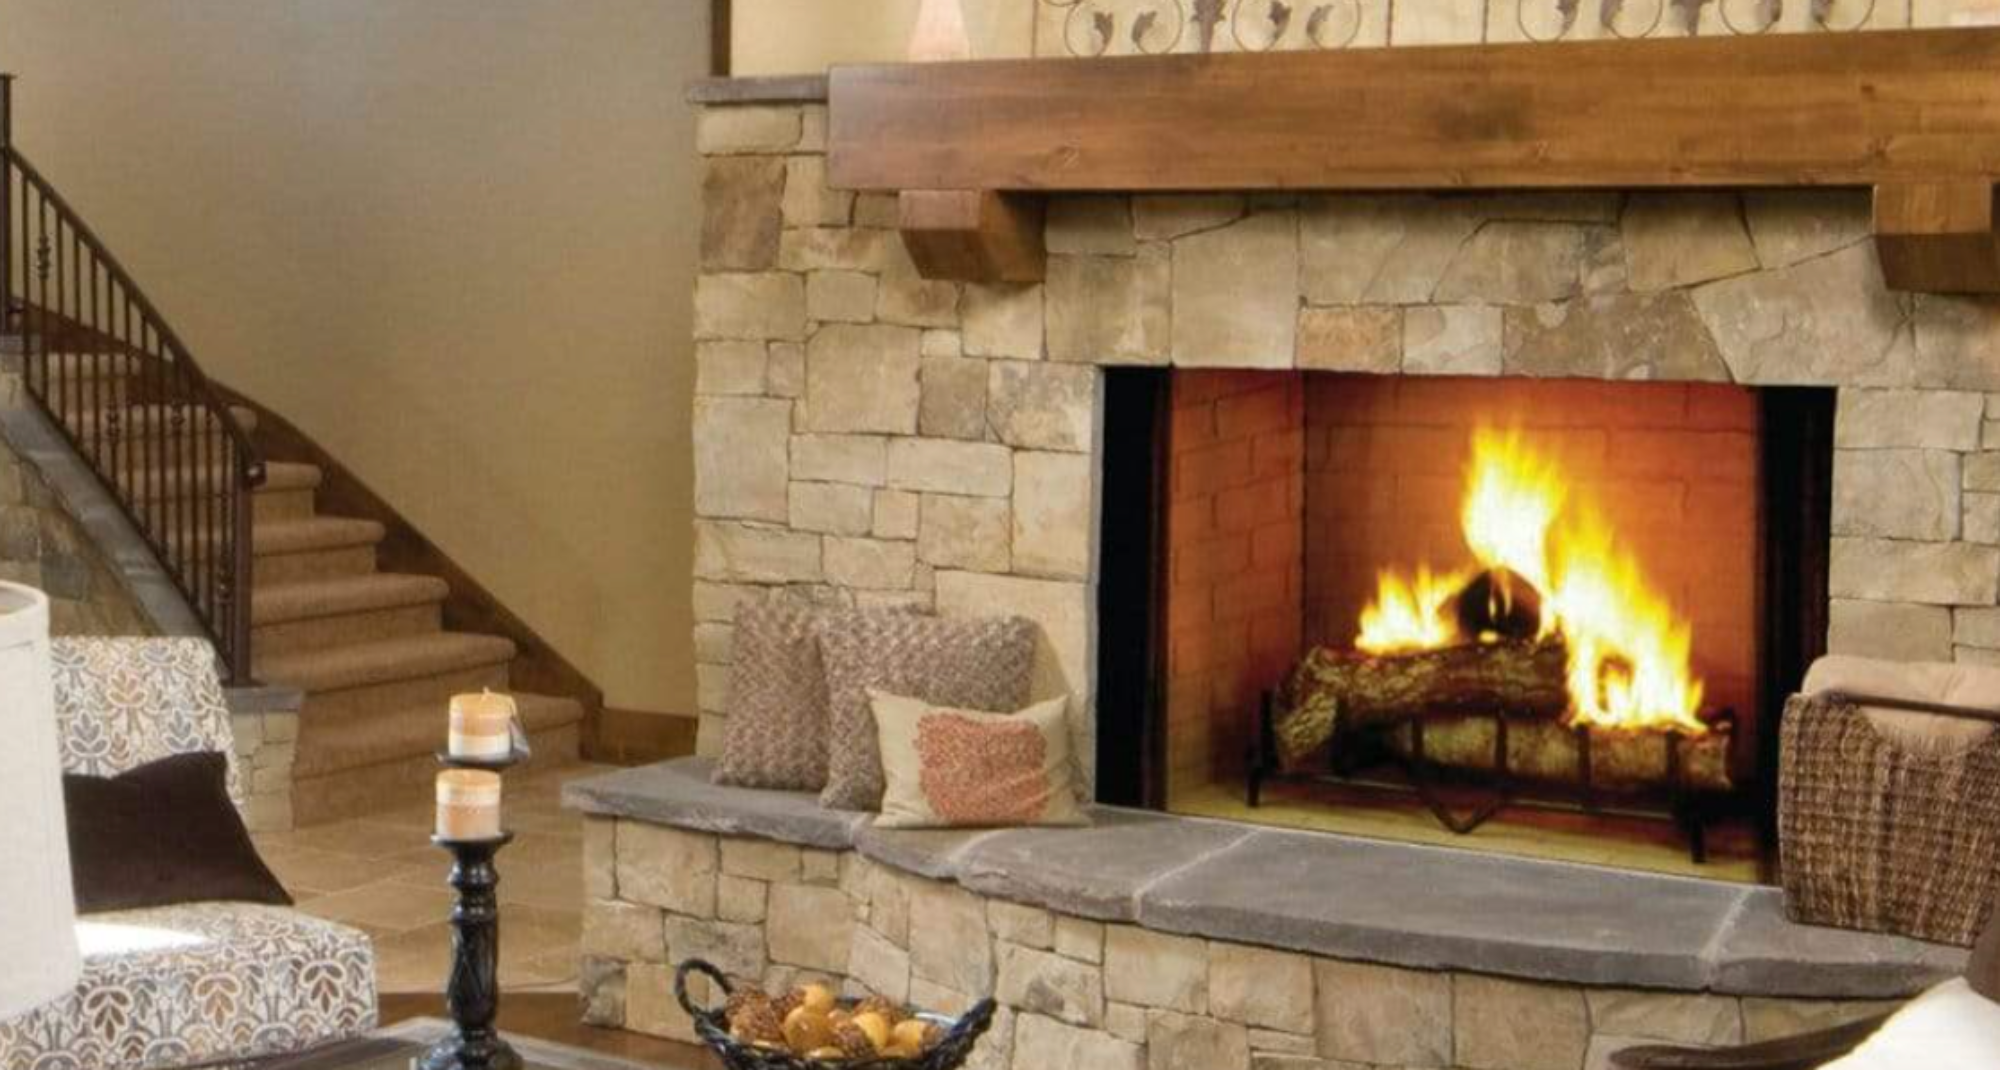 Majestic 36" Biltmore Radiant Wood Burning Fireplace